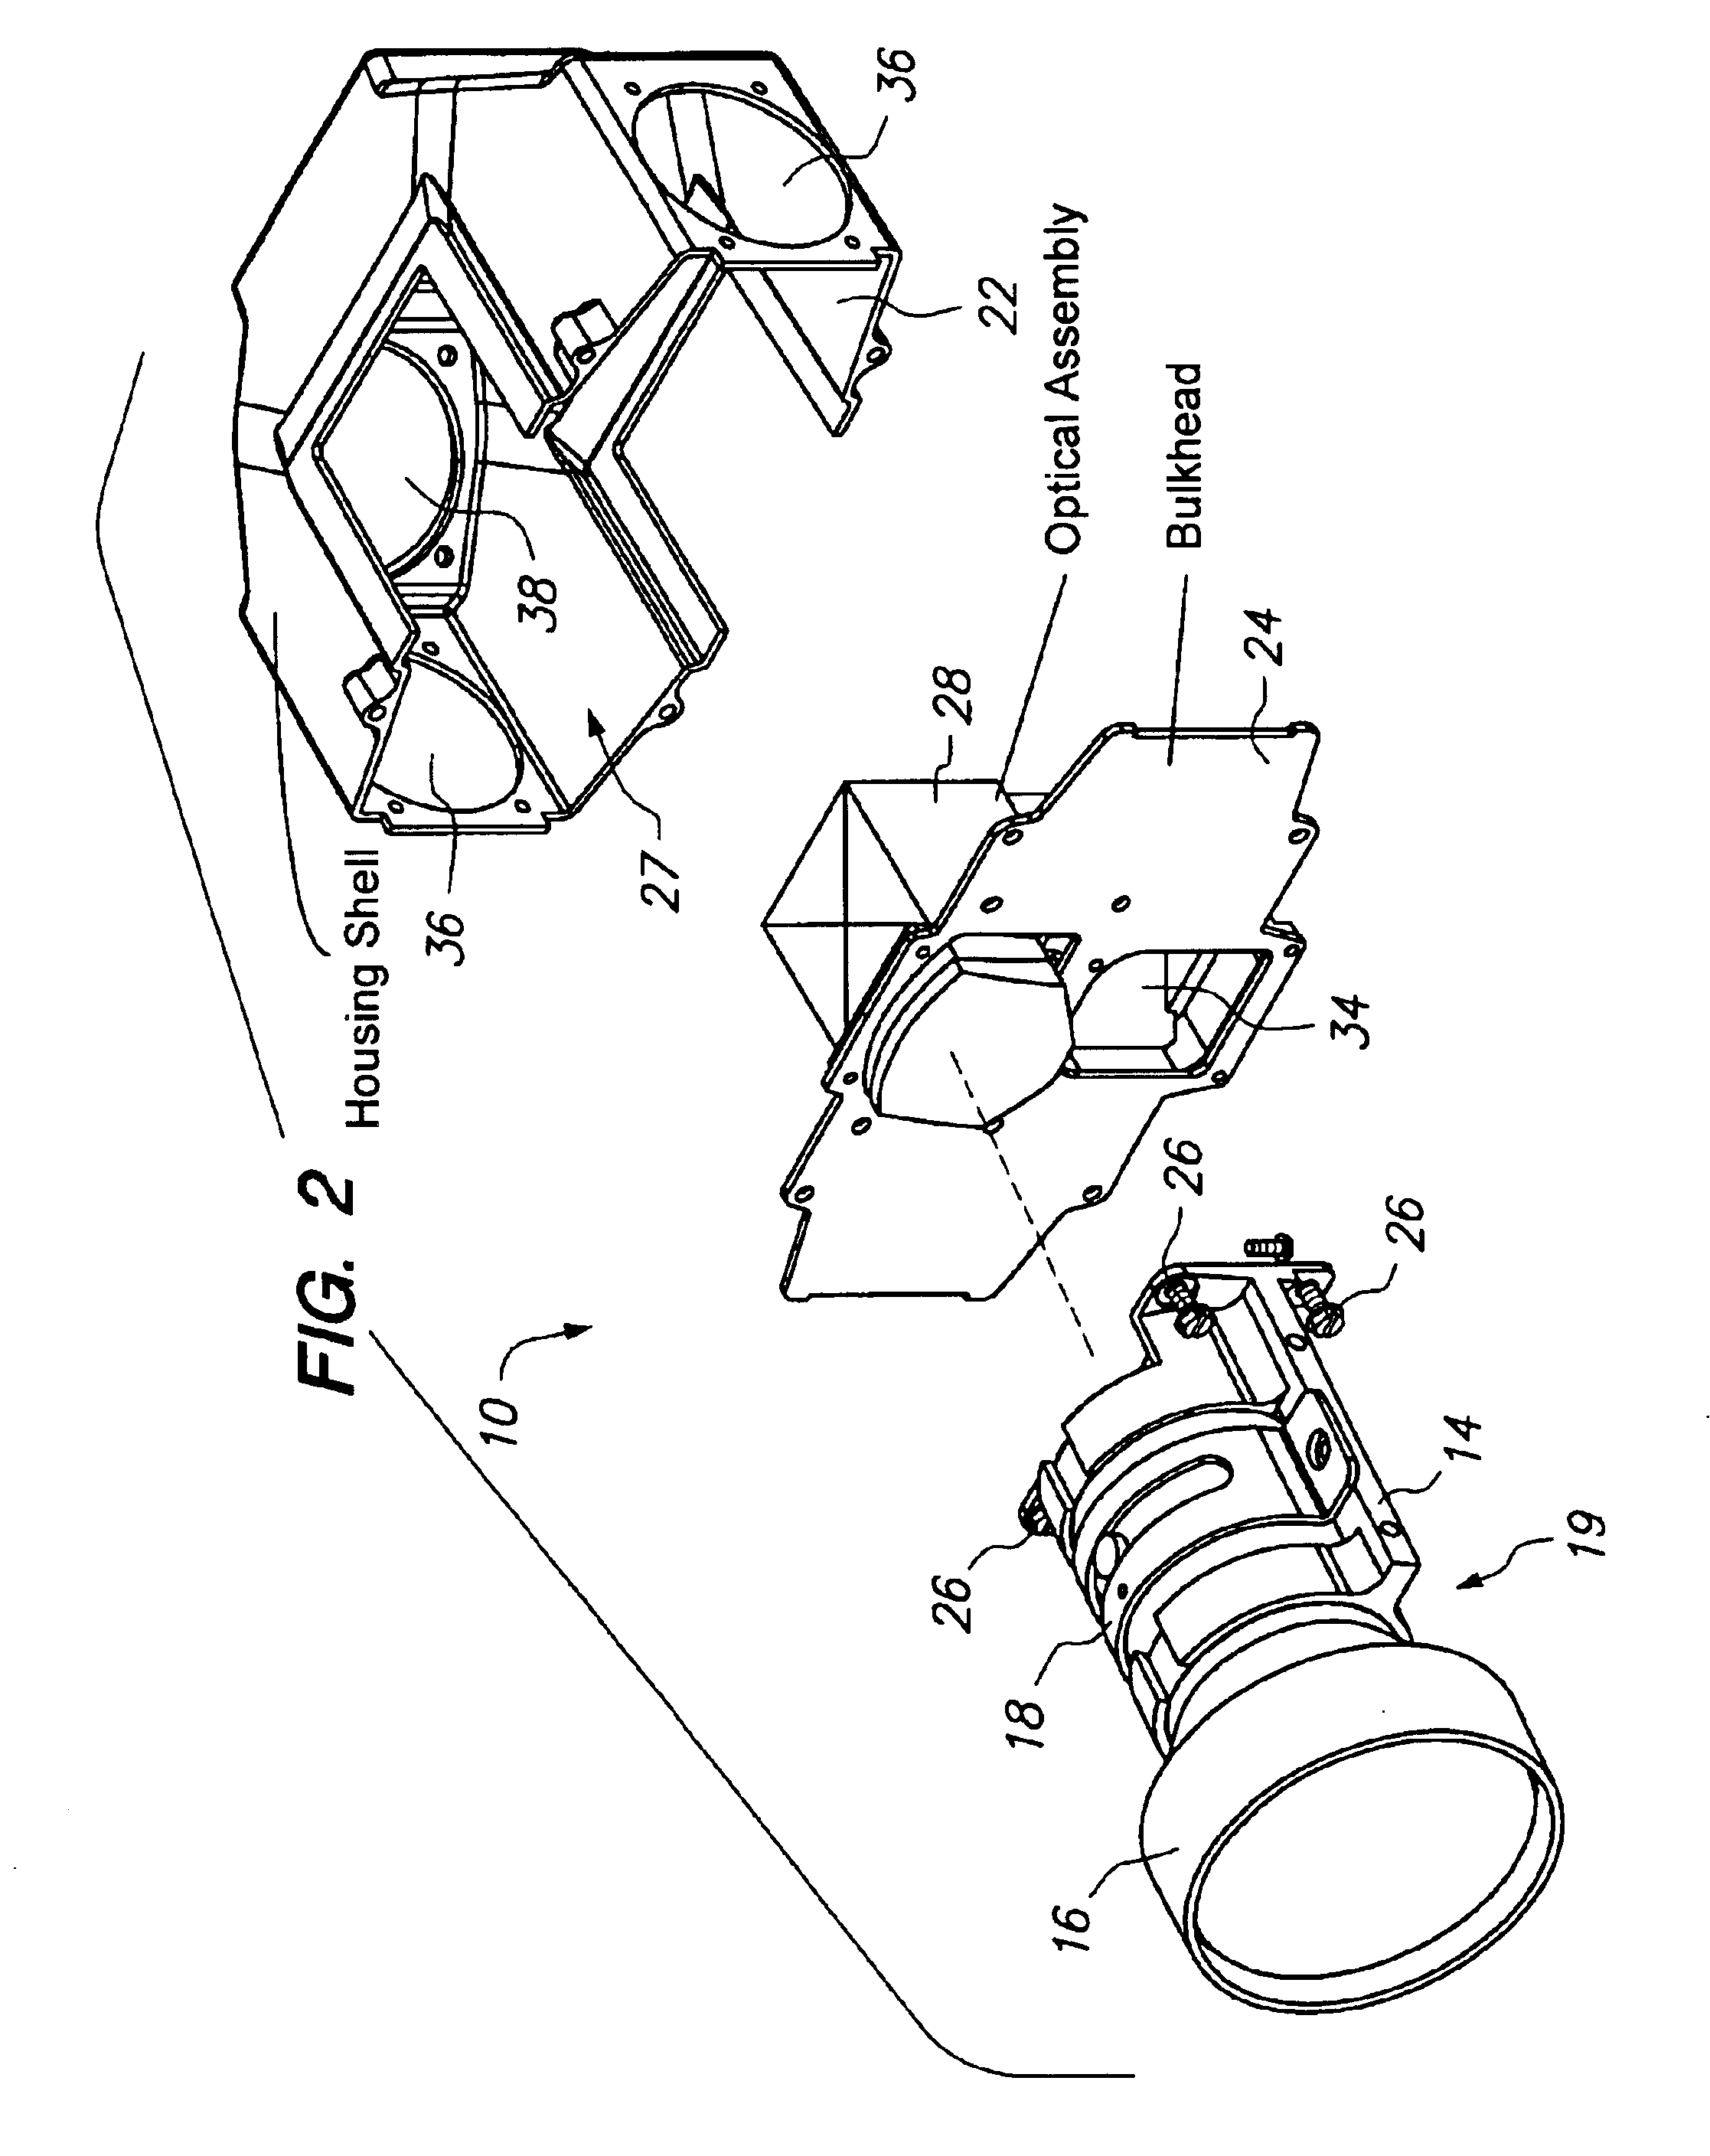 Multi channel imaging engine apparatus